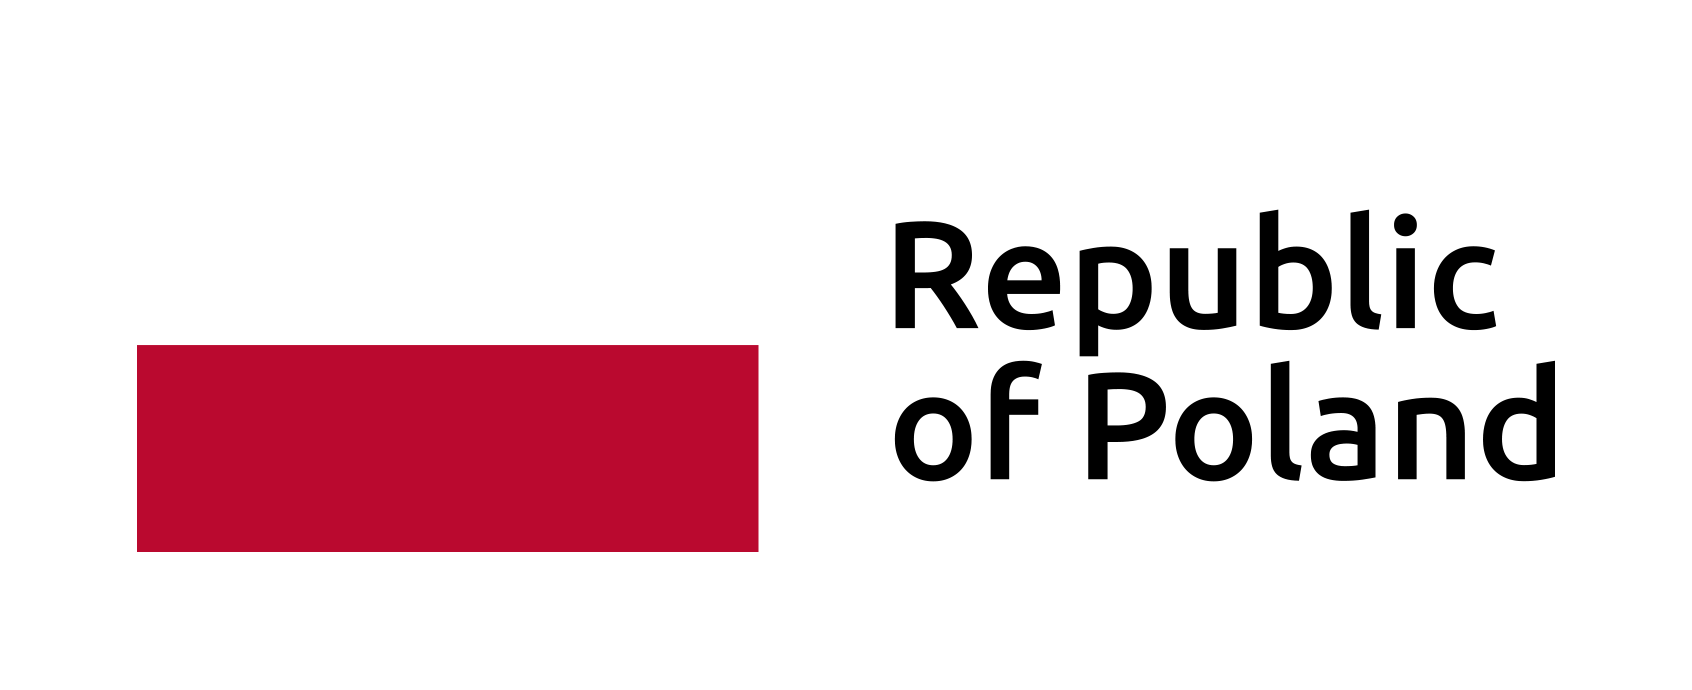 Republic of Poland Flag